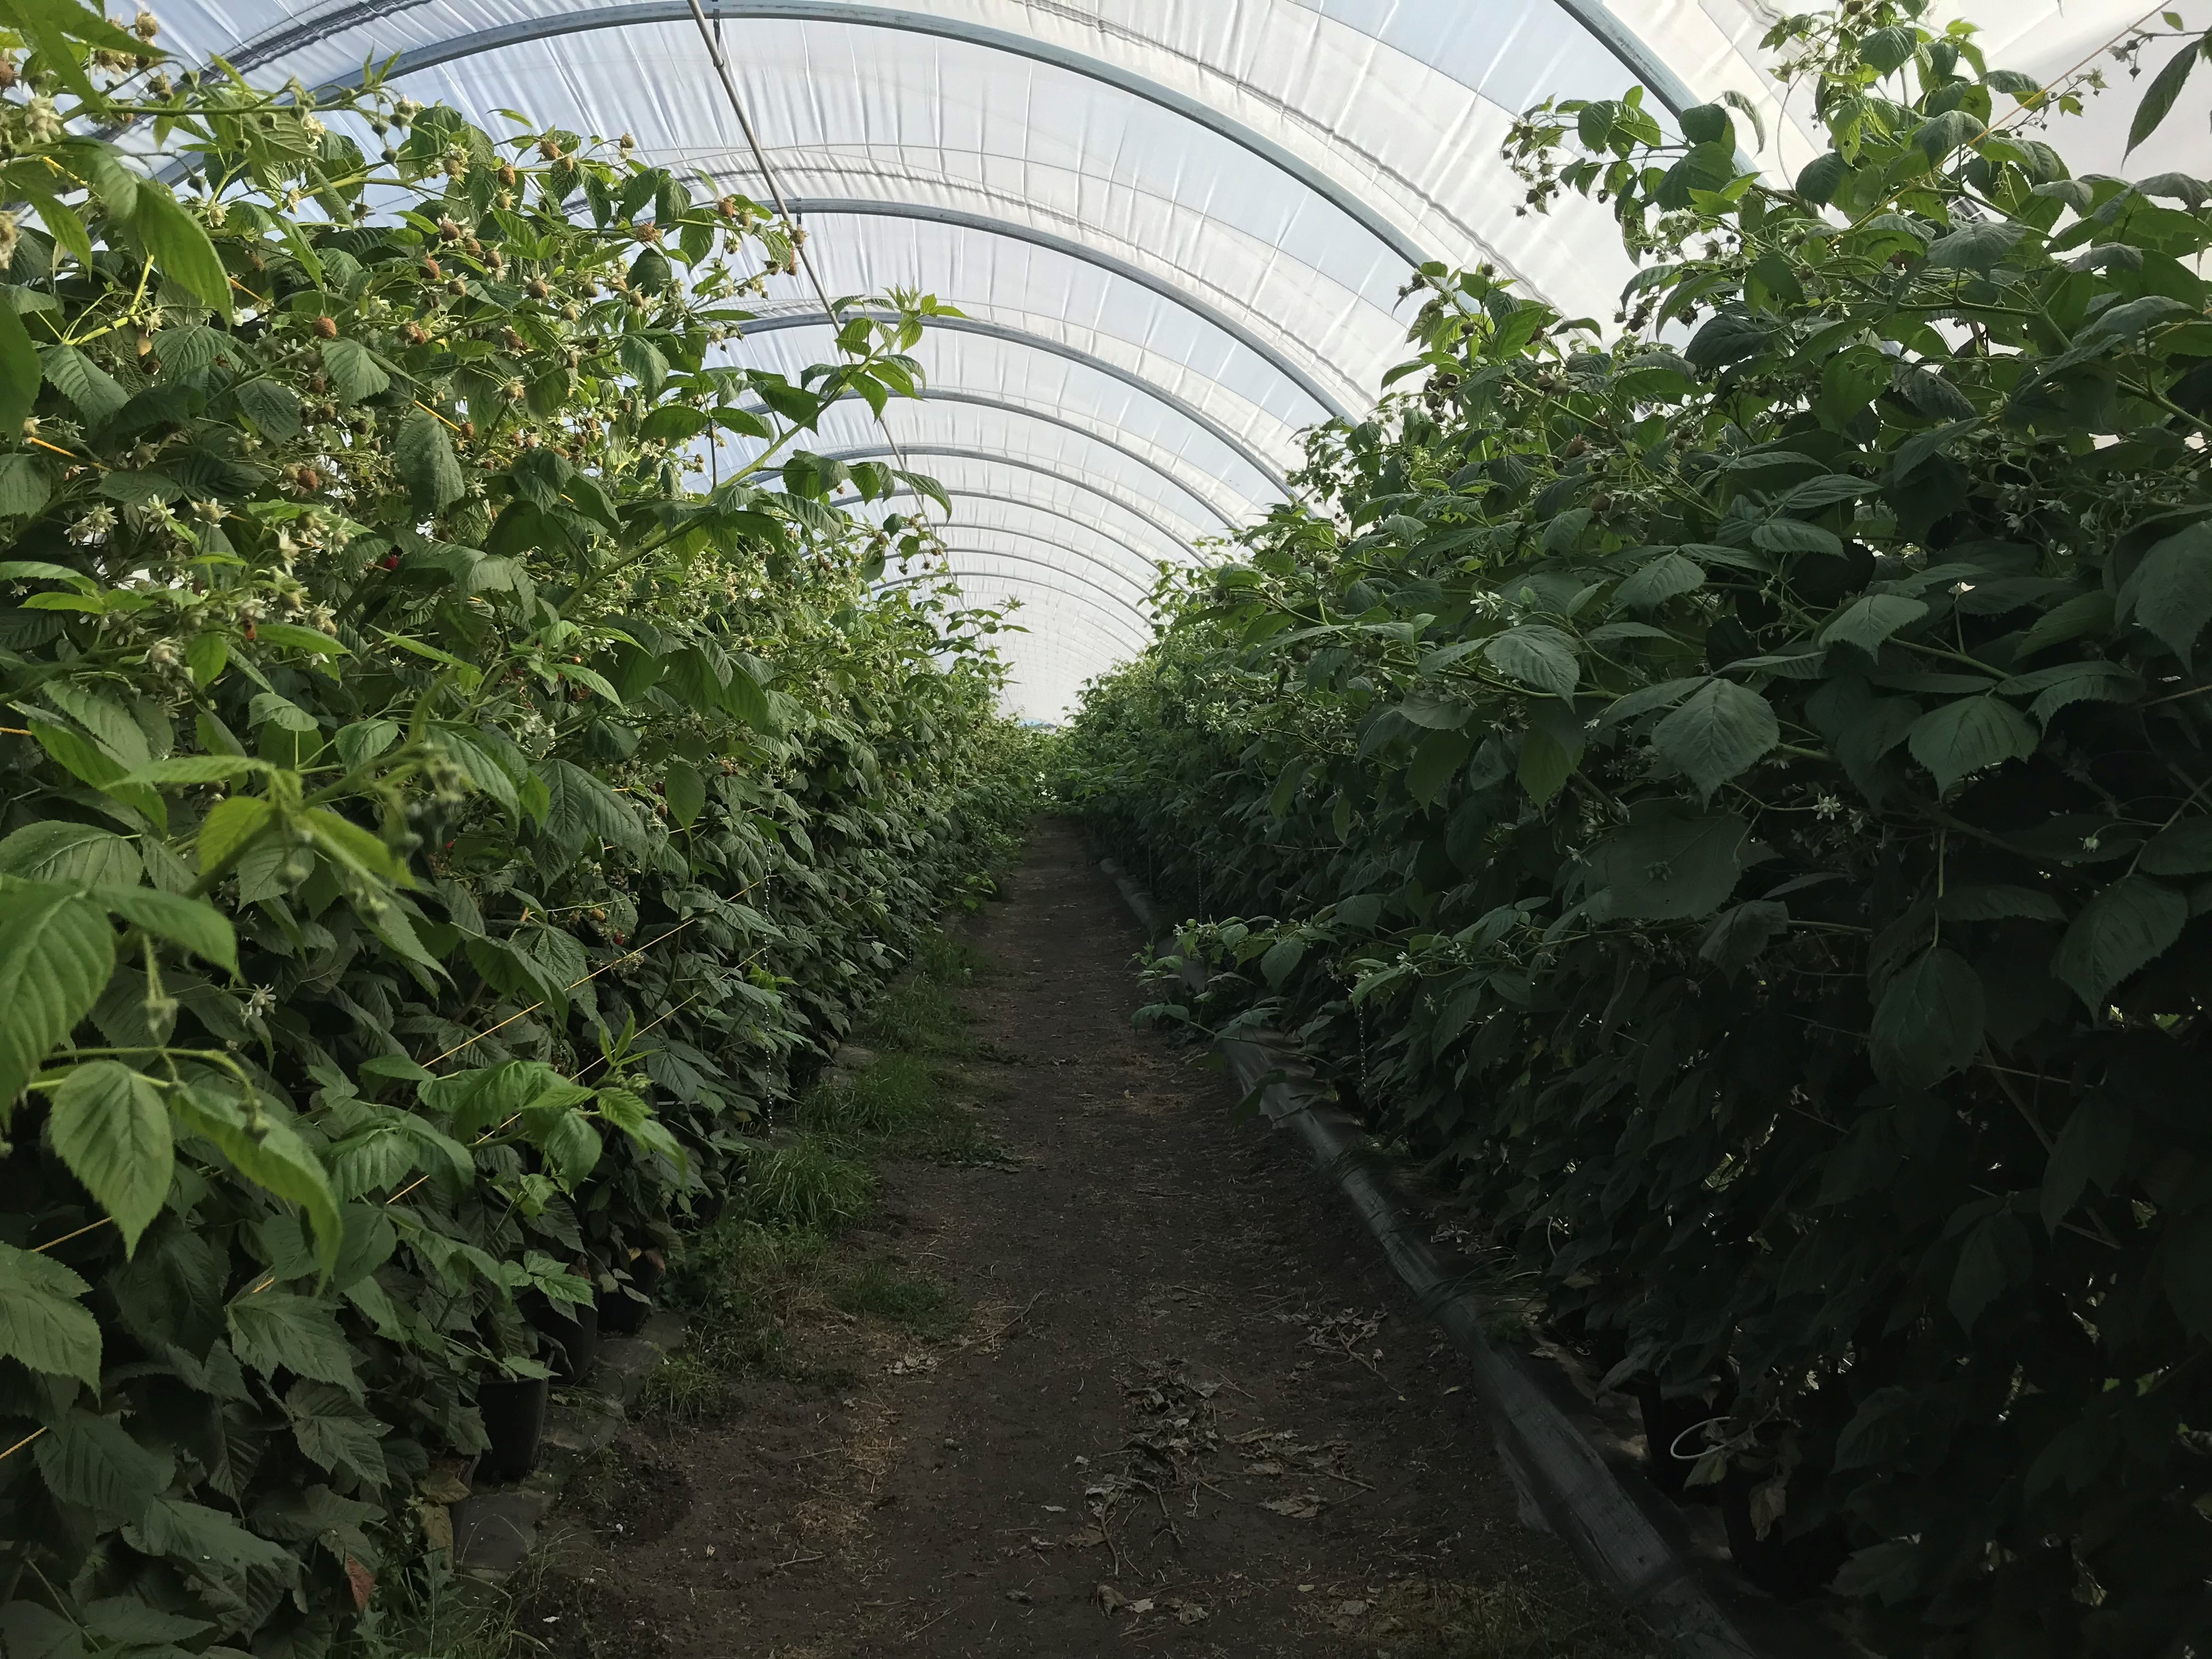 Raspberries in tunnels at Pinata Farms in Orielton